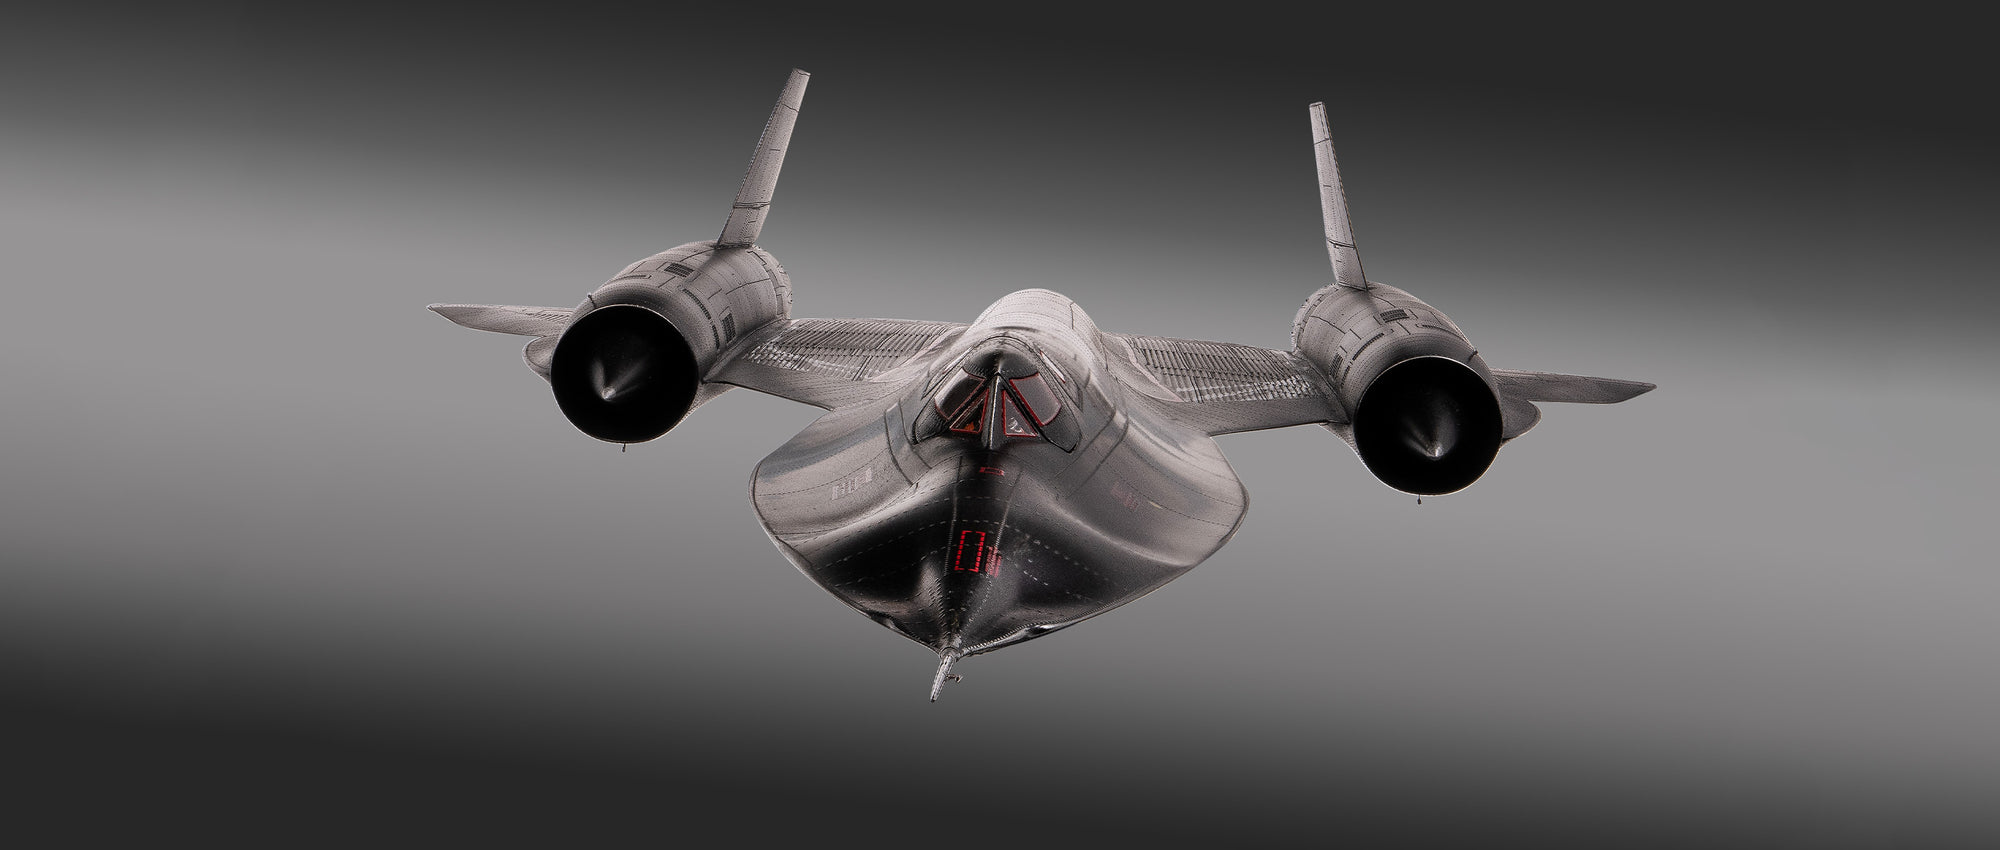 Lockheed SR-71 "Blackbird"